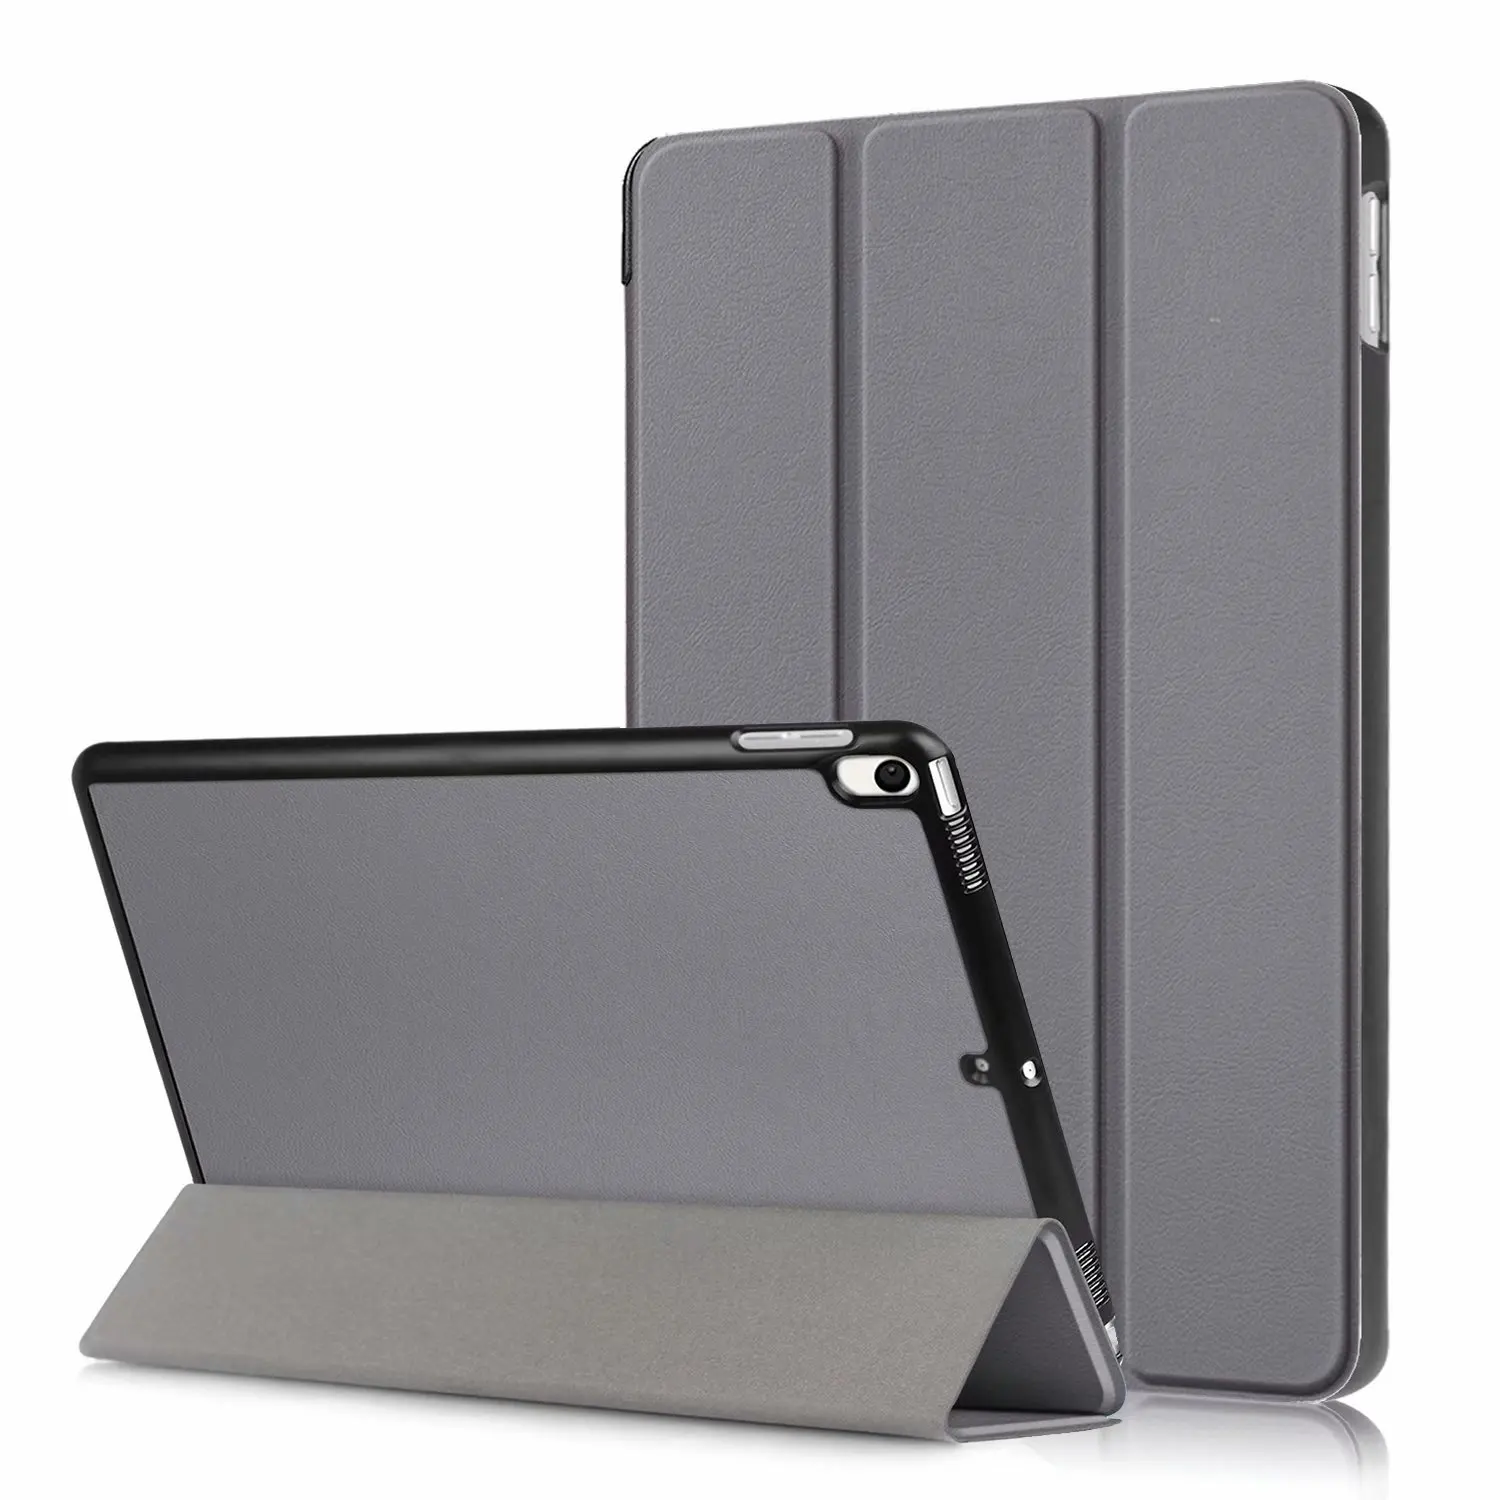 Чехол для iPad Pro 10,5 Air 3 7th generatio, ультра тонкий смарт-чехол для iPad 10,5 дюймов, чехол